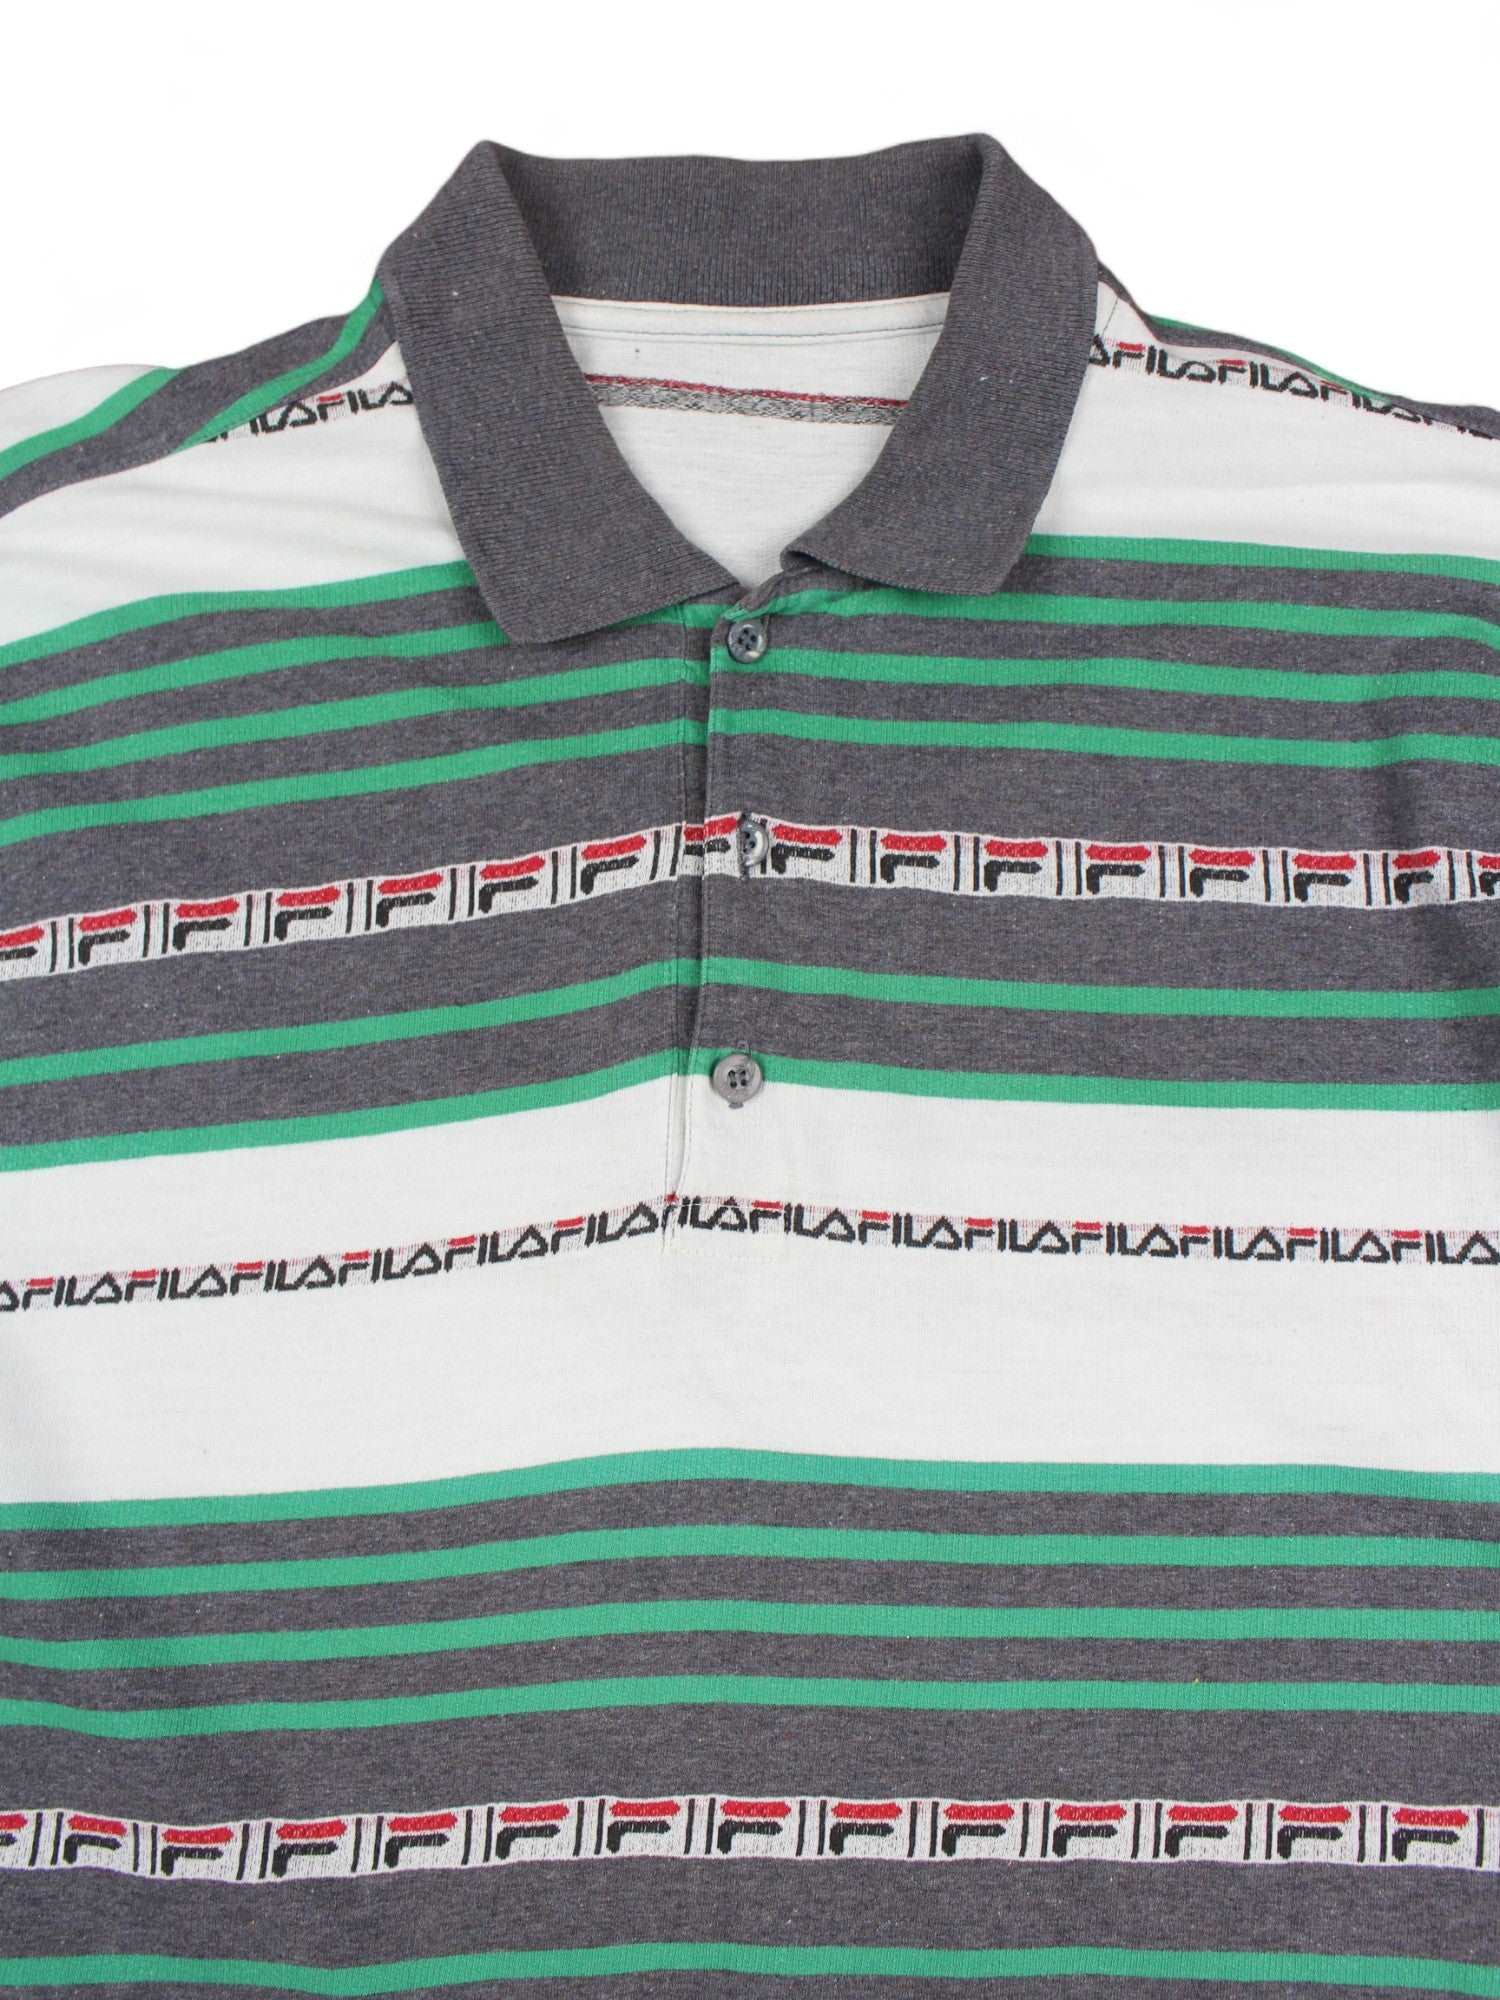 90s Fila Patterned Striped Polo Top (L) - Garm Shack